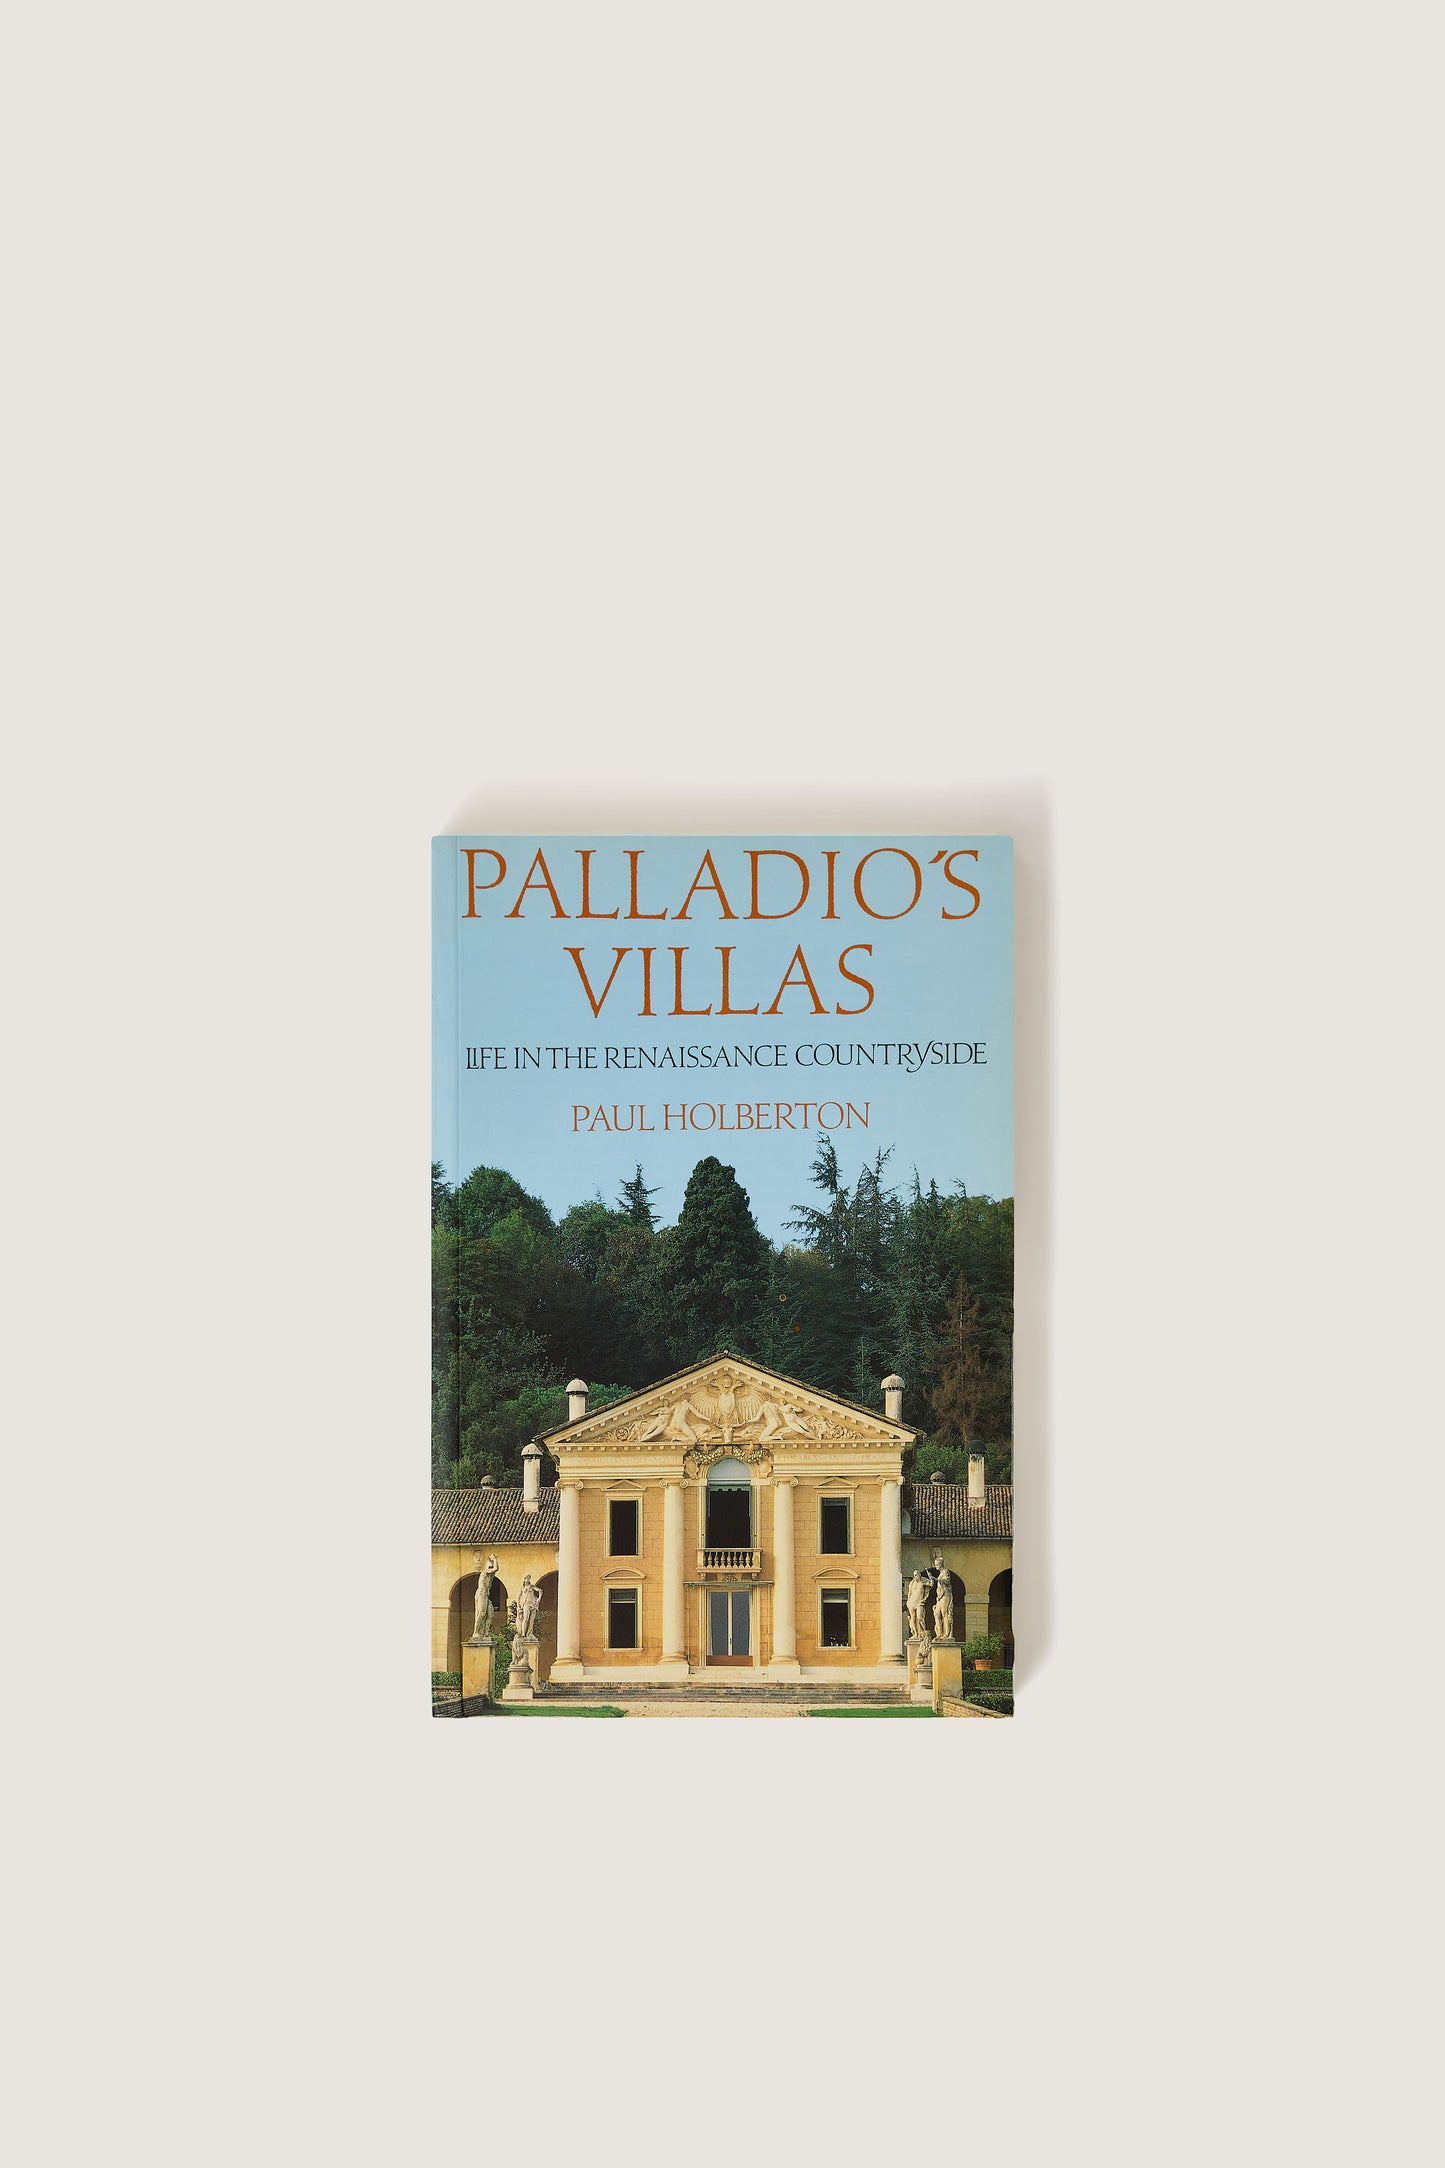 BOOK "PALLADIO'S VILLAS : LIFE IN THE RENAISSANCE COUNTRYSIDE"